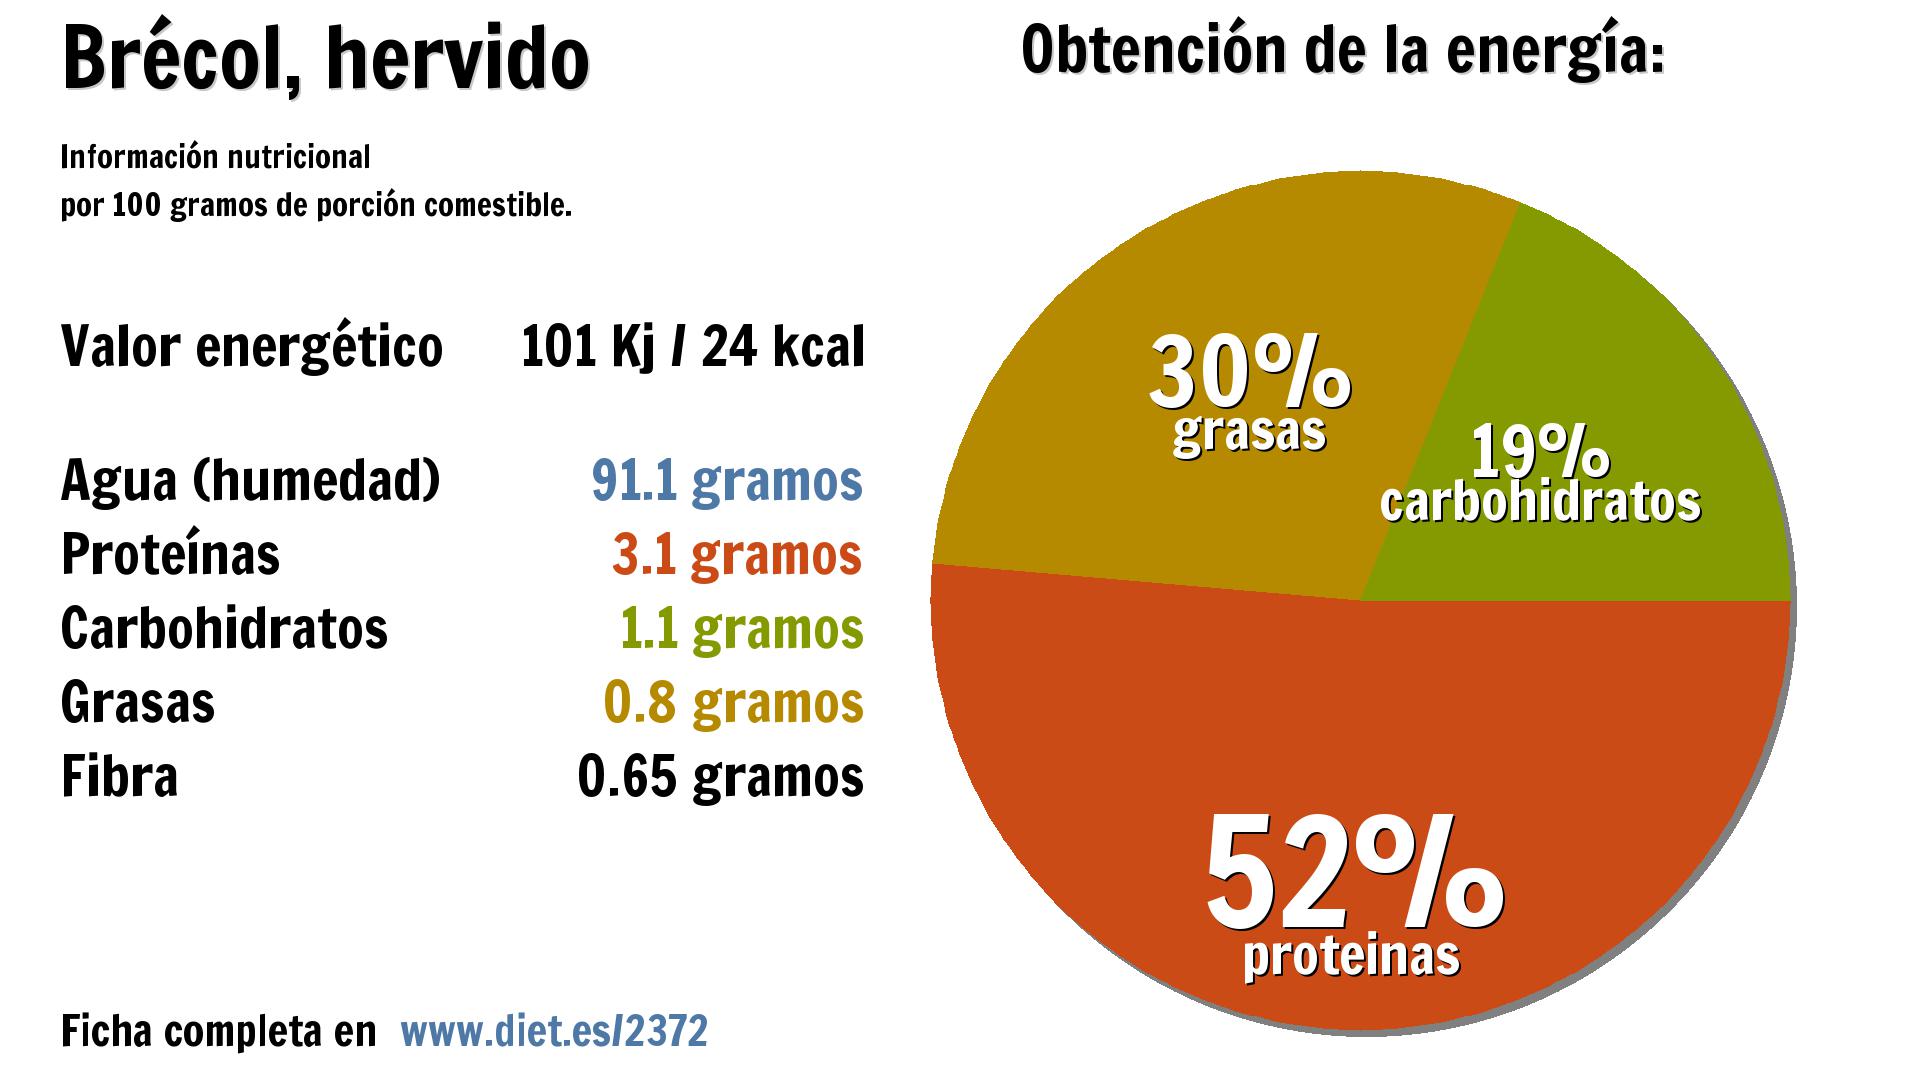 Brécol, hervido: energía 101 Kj, agua 91 g., proteínas 3 g., carbohidratos 1 g., grasas 1 g. y fibra 1 g.